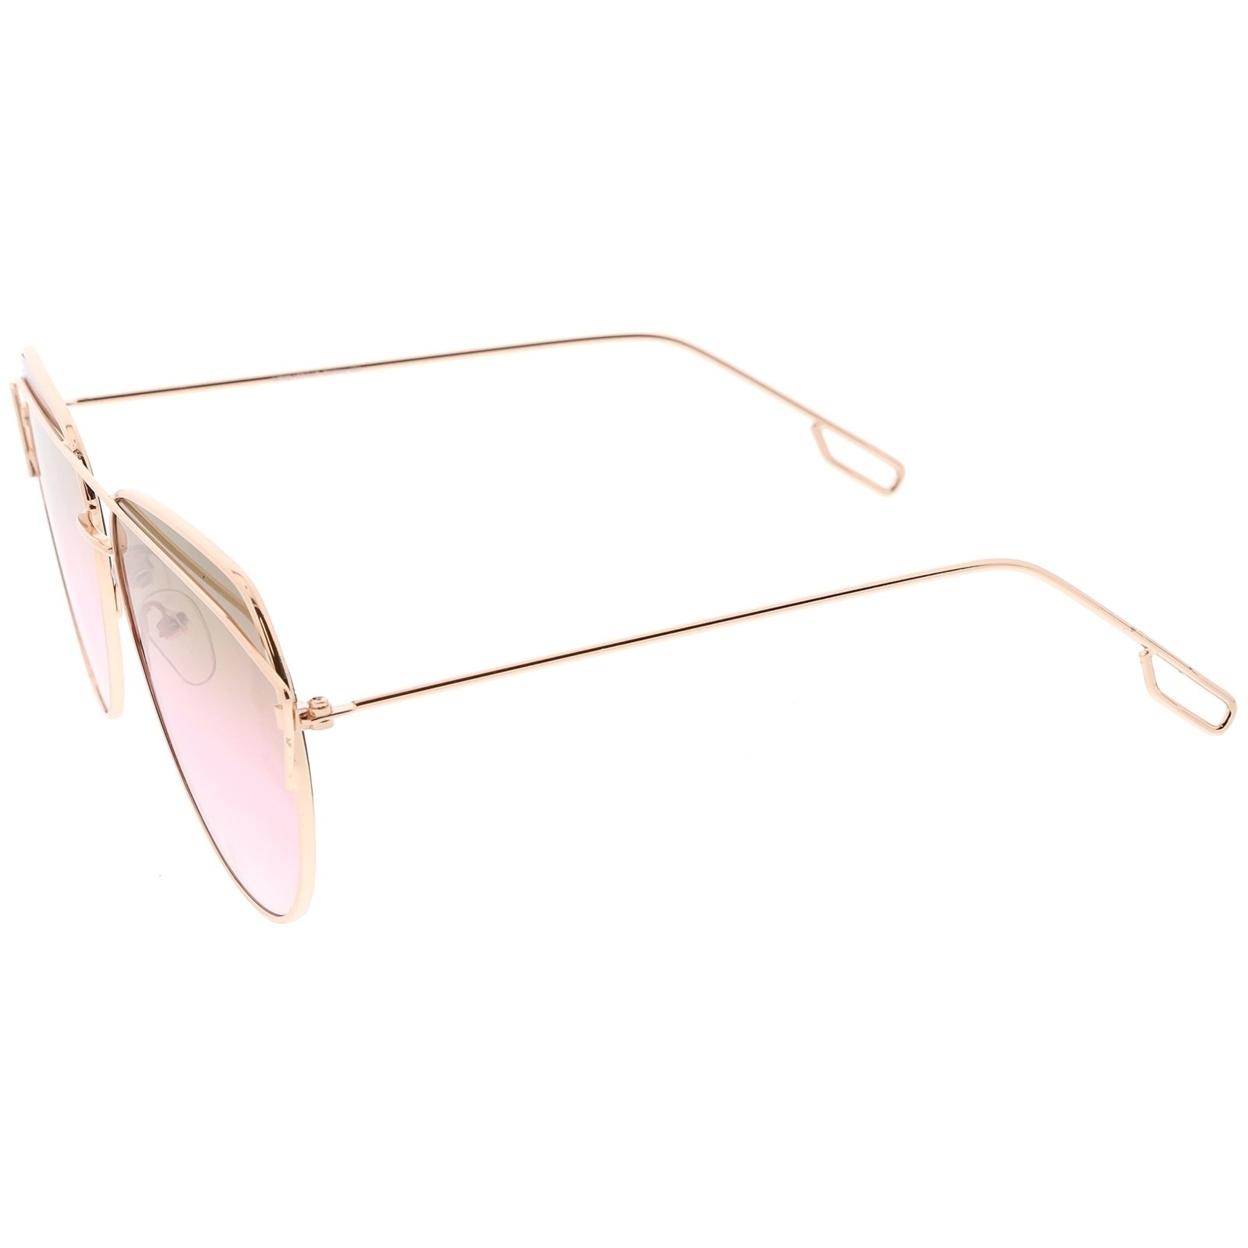 Modern Aviator Sunglasses Metal Crossbar Slim Arms Color Gradient Flat Lens 58mm - Silver / Pink Yellow